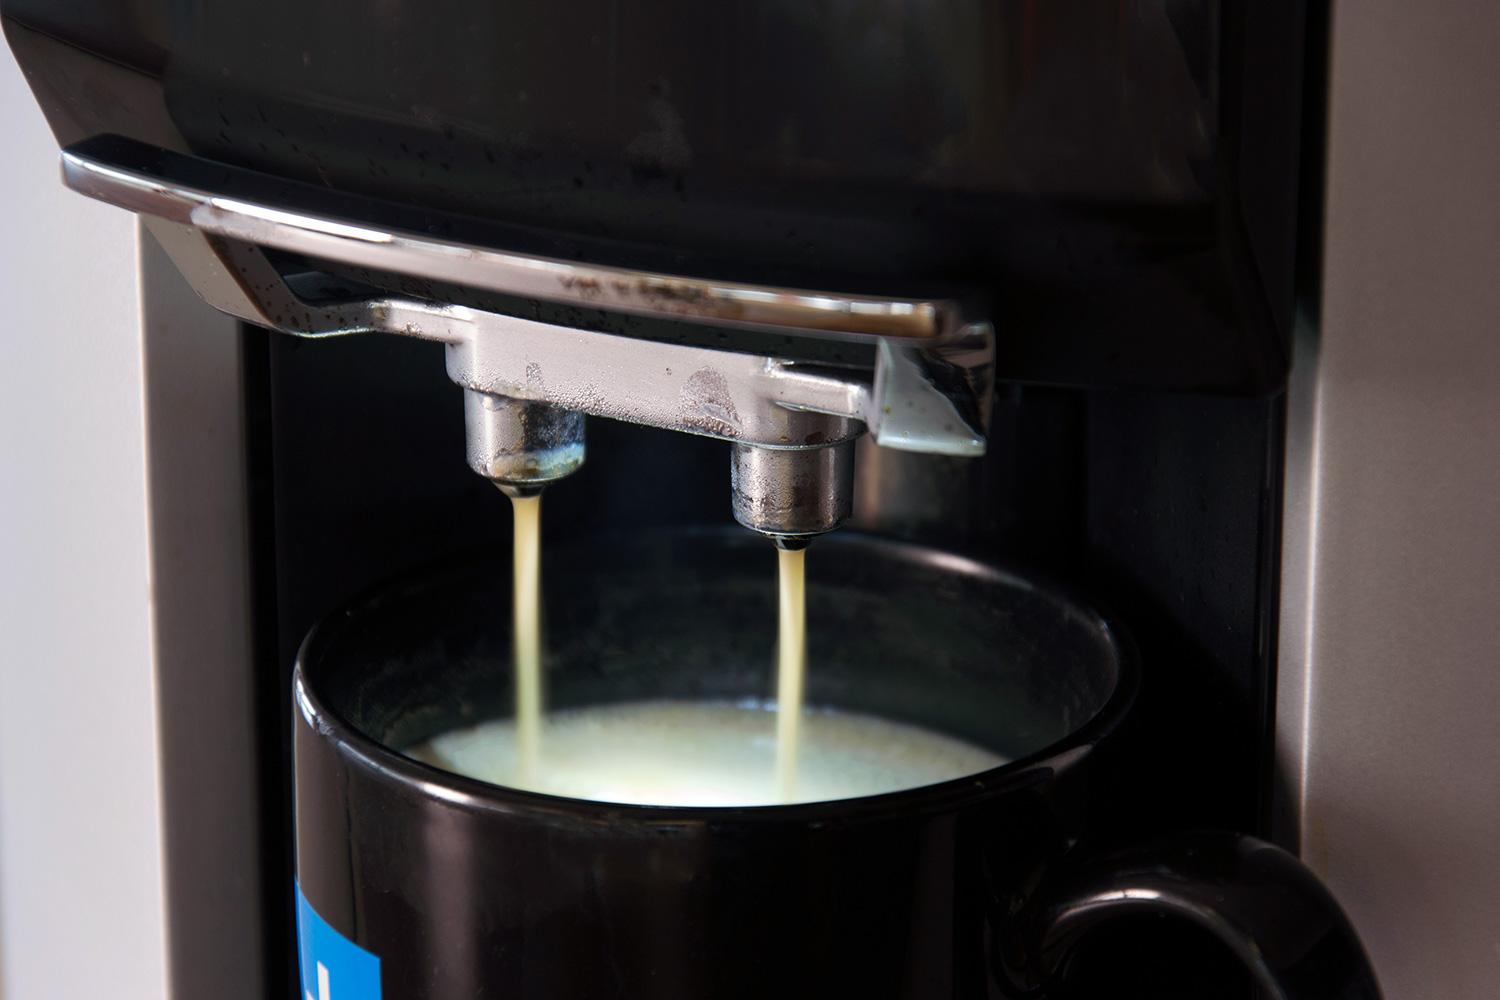 Krups EA9010 Review – Espresso Machine Ratings